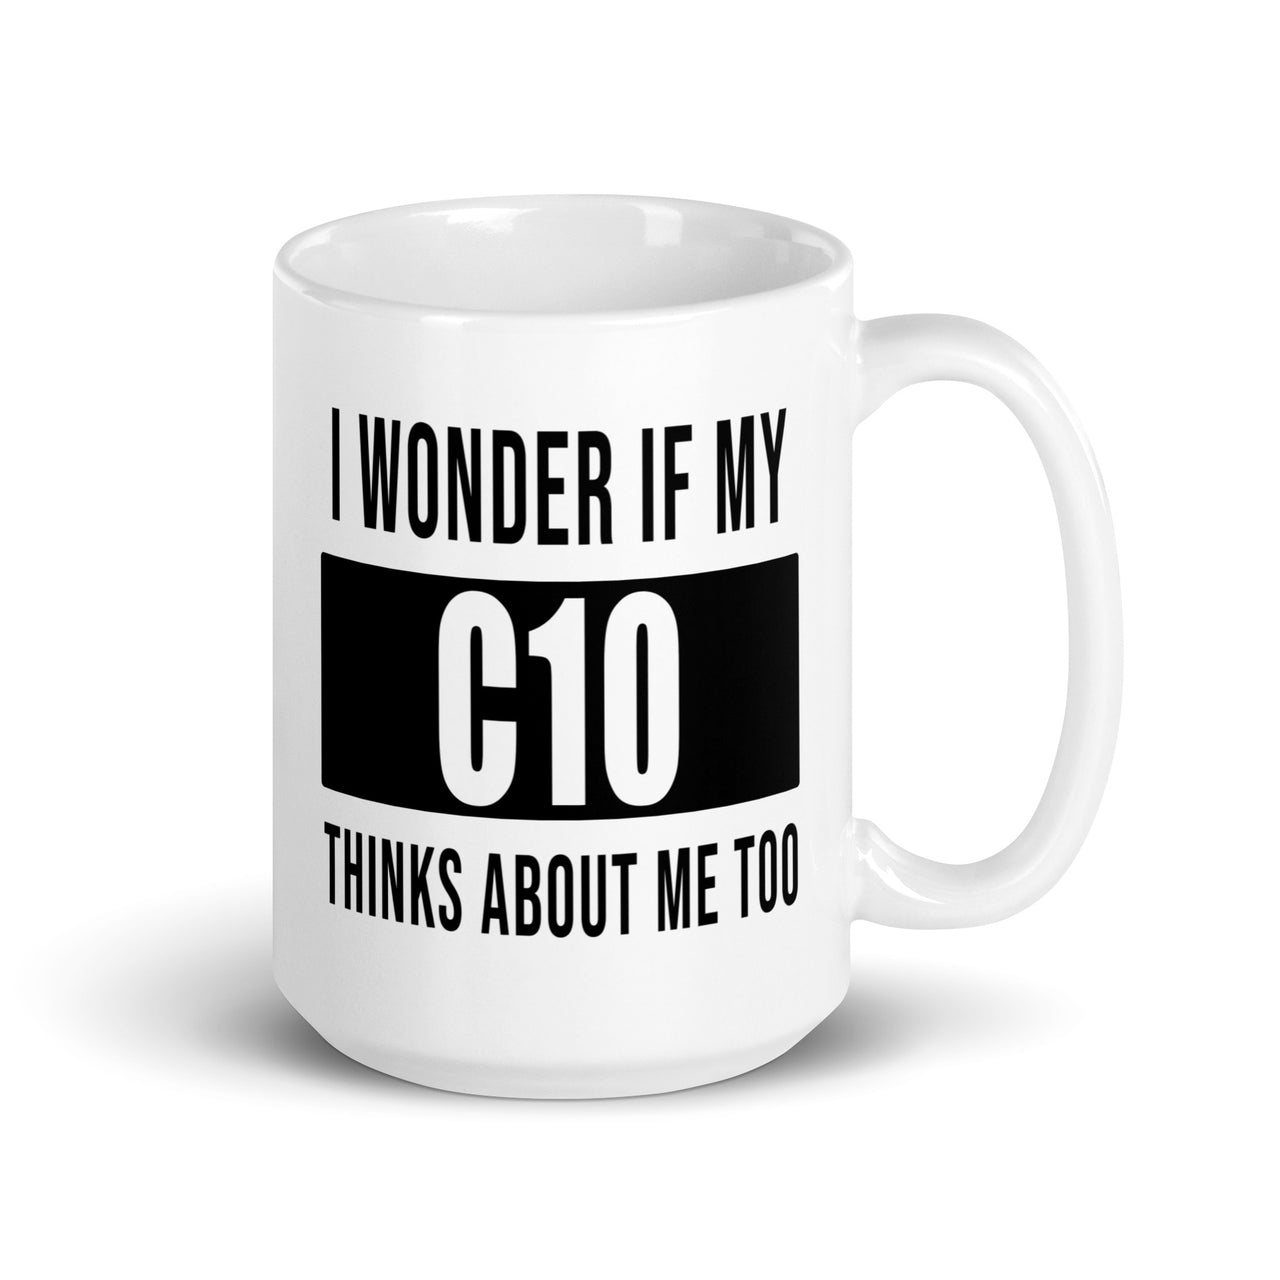 C10 Truck Coffee Mug Cup